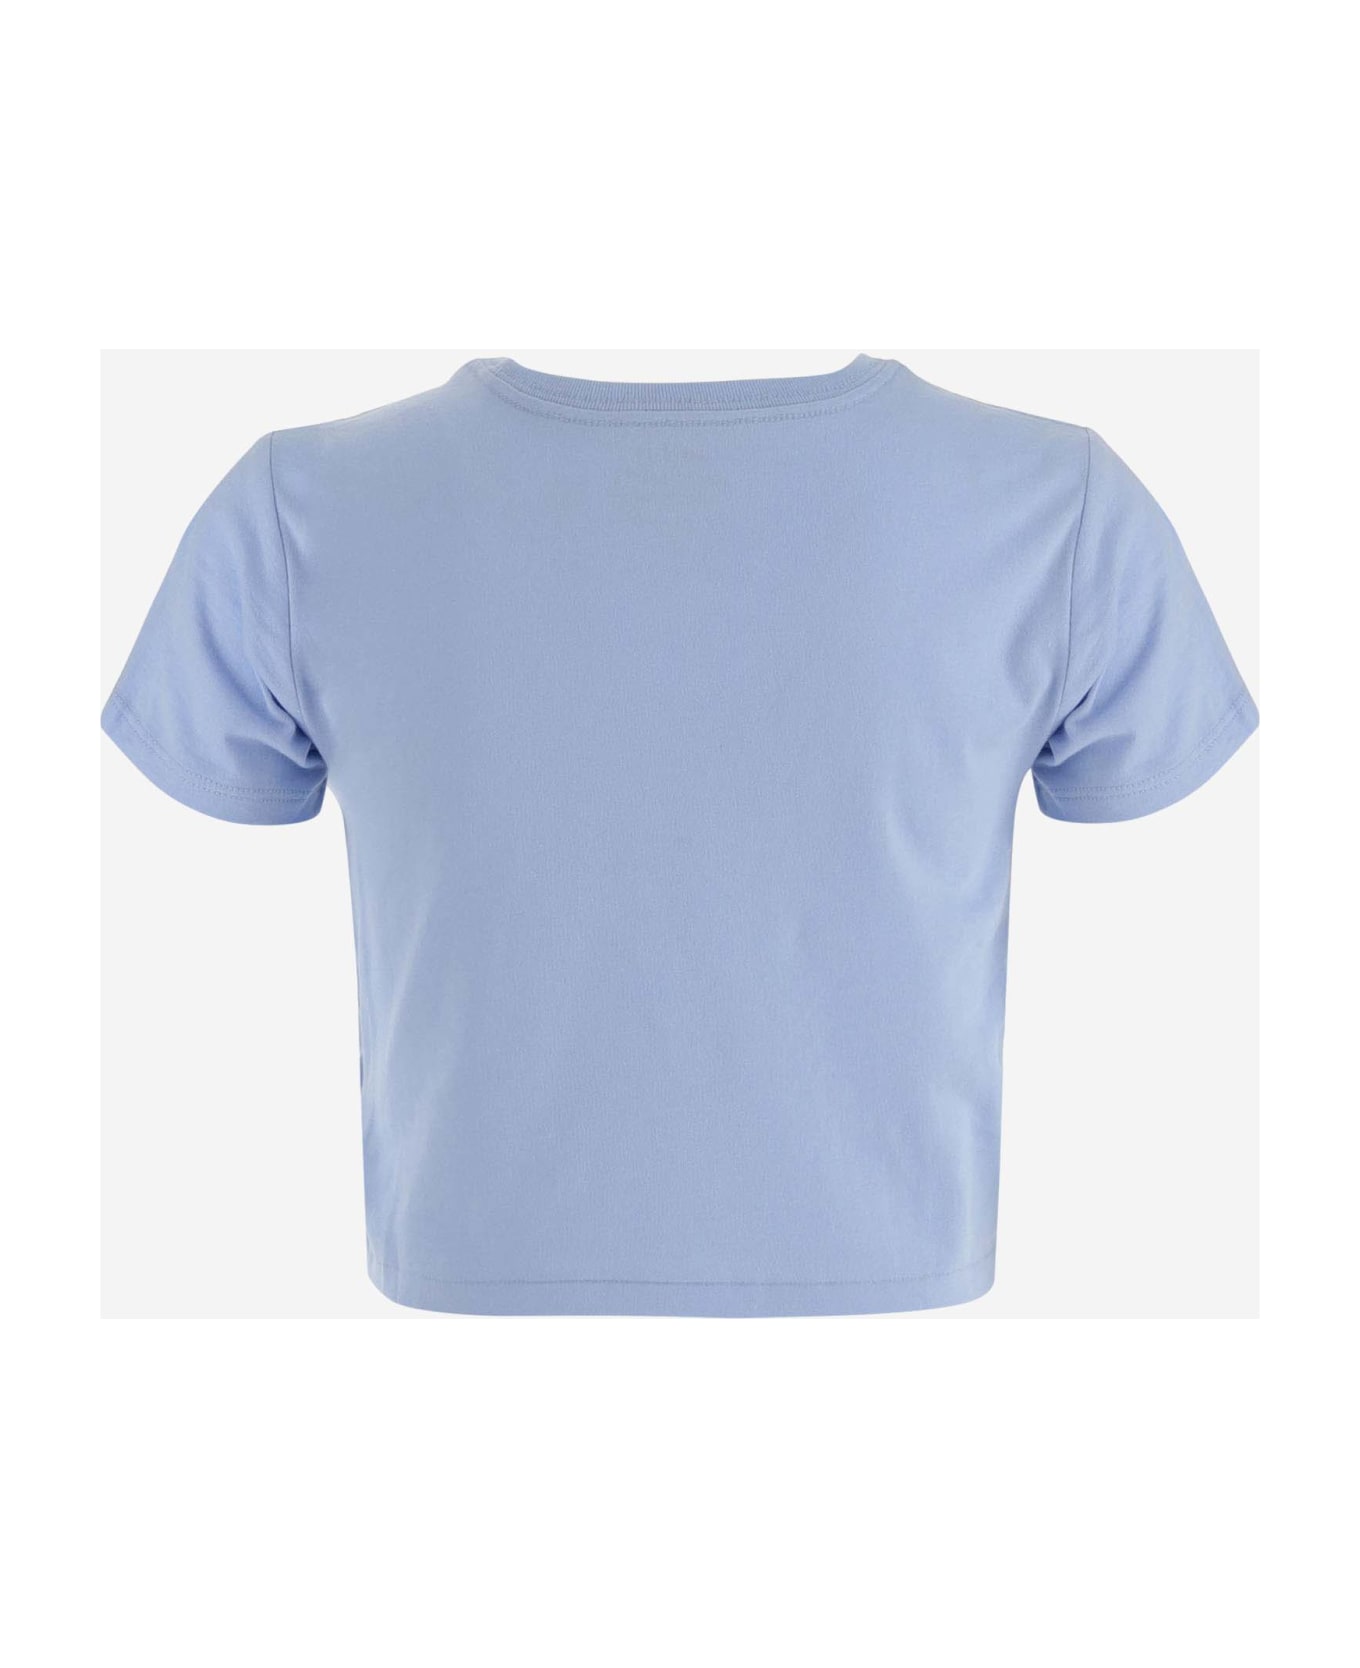 Polo Ralph Lauren Cotton Crop T-shirt With Logo - Clear Blue